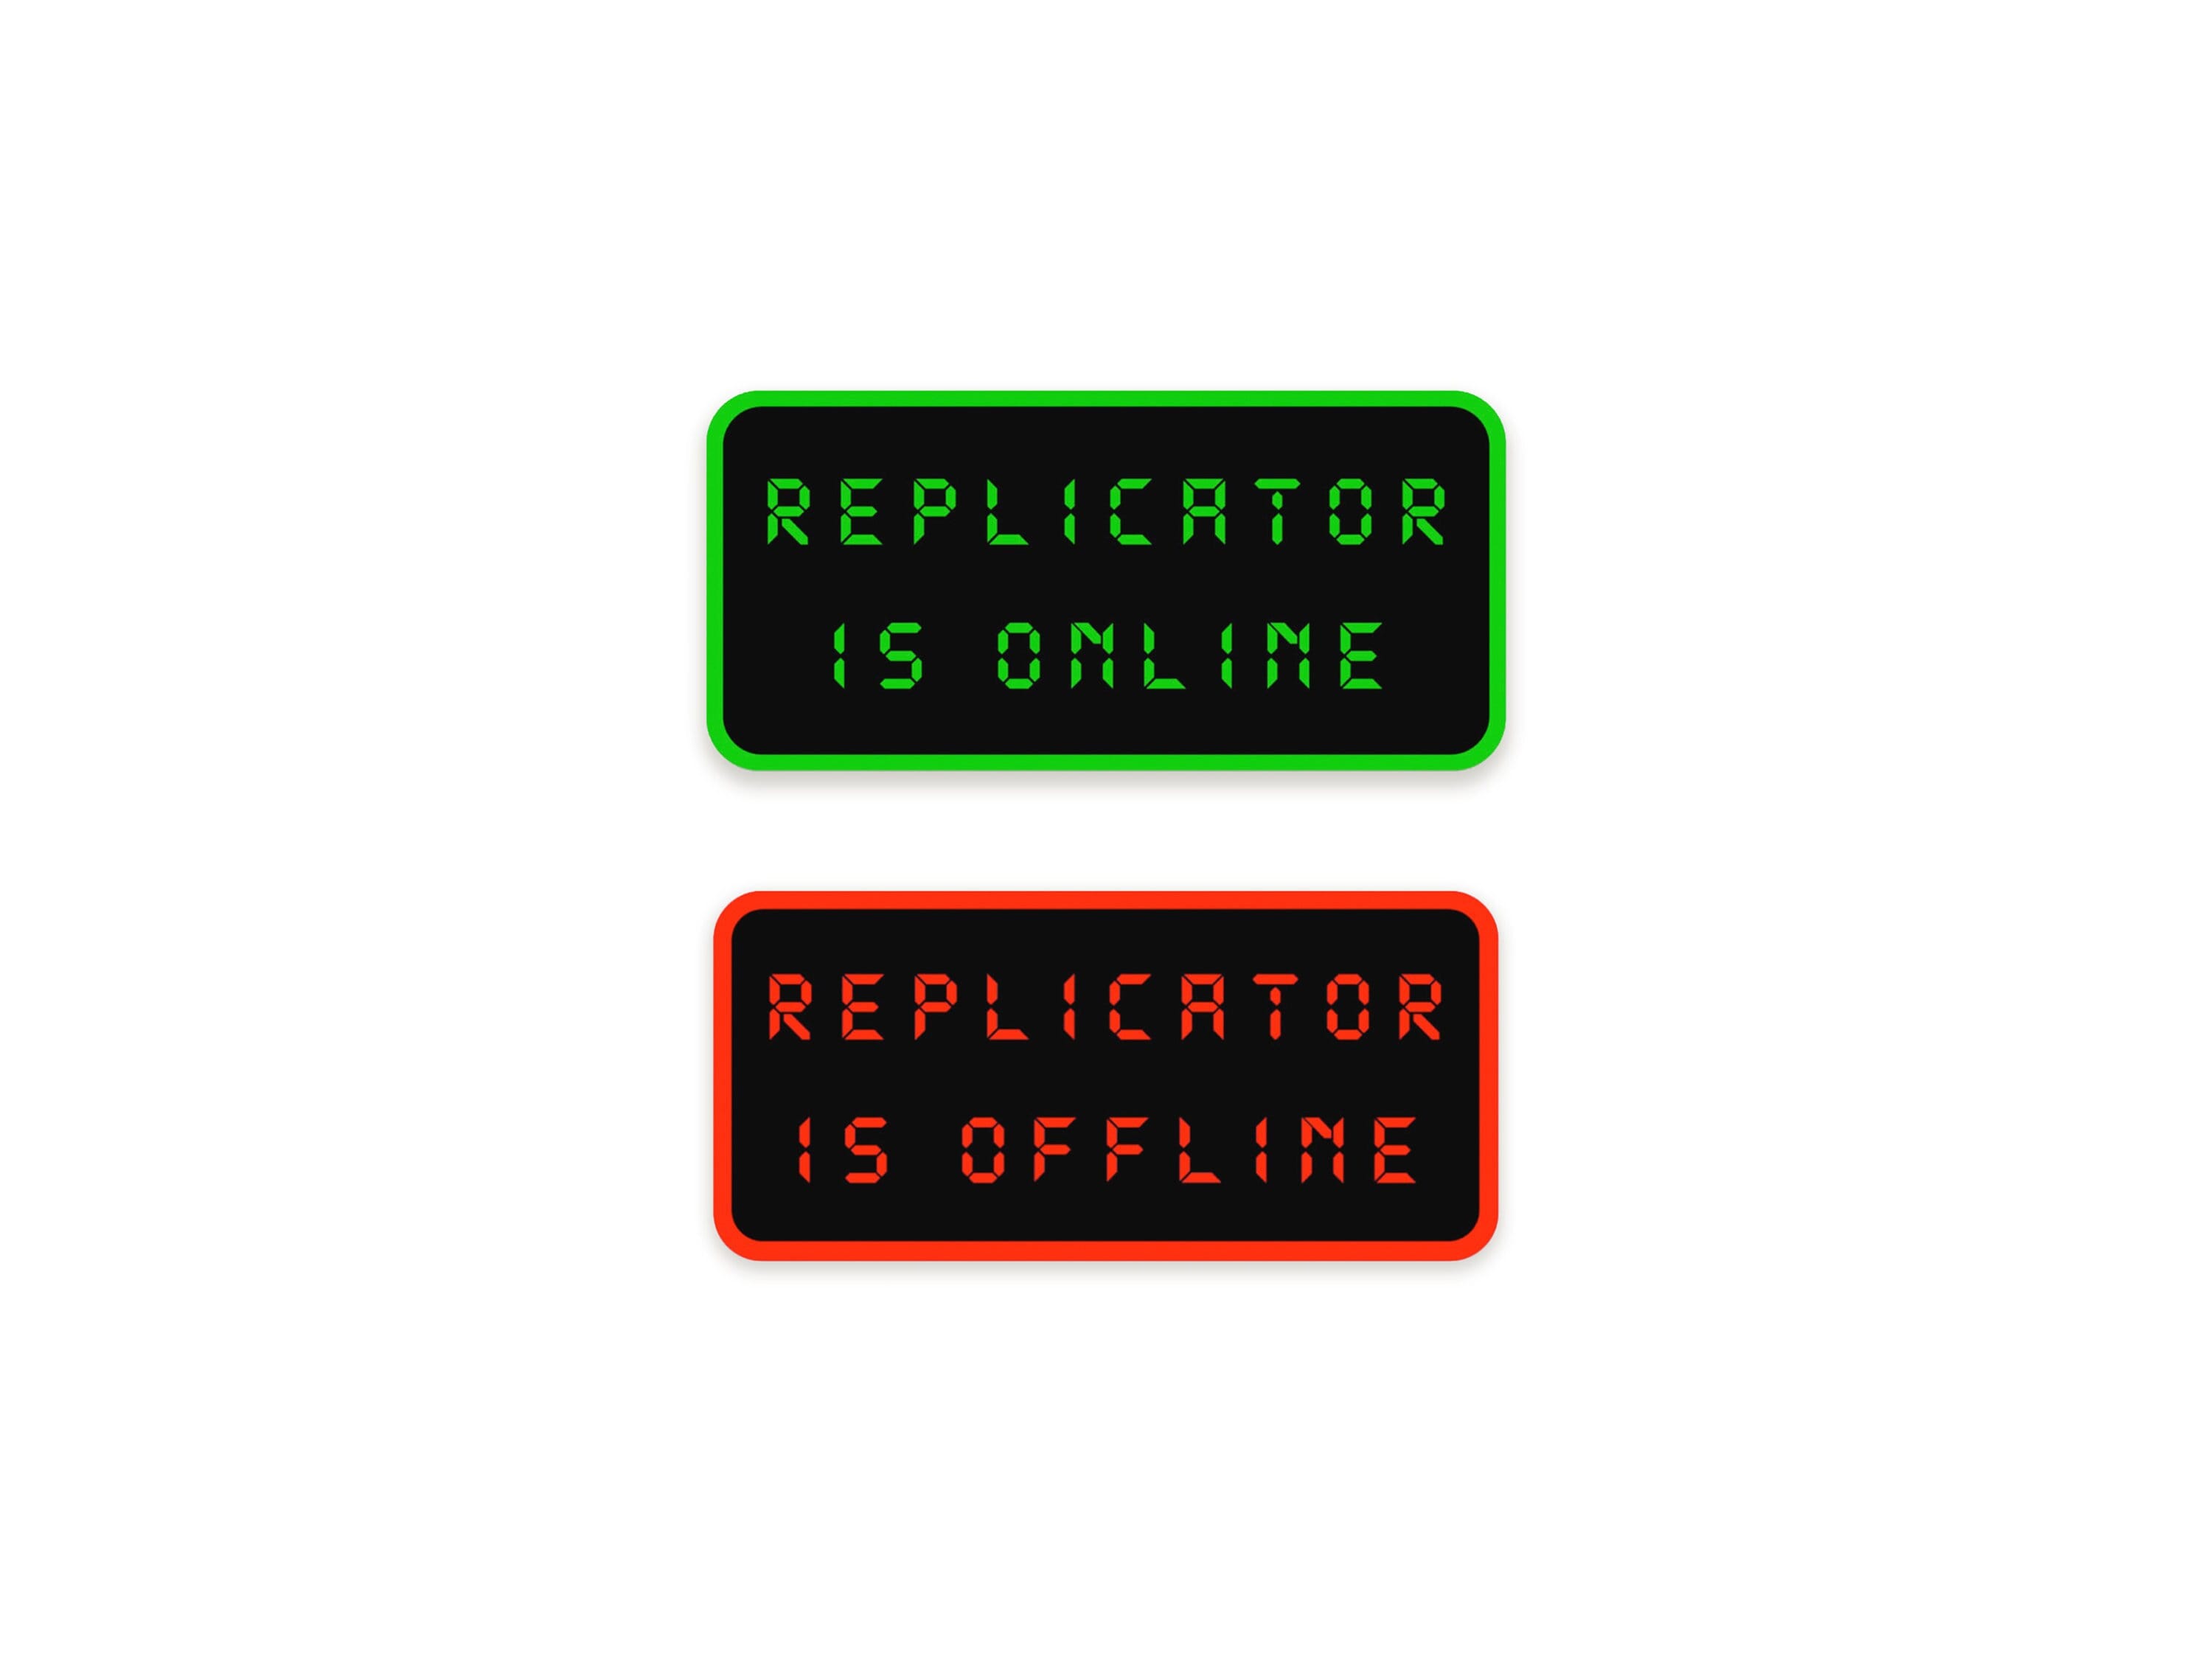 Replicator Offline Refrigerator Magnet - Trekkie Fridge Magnet - Sci-fi Trek Gift